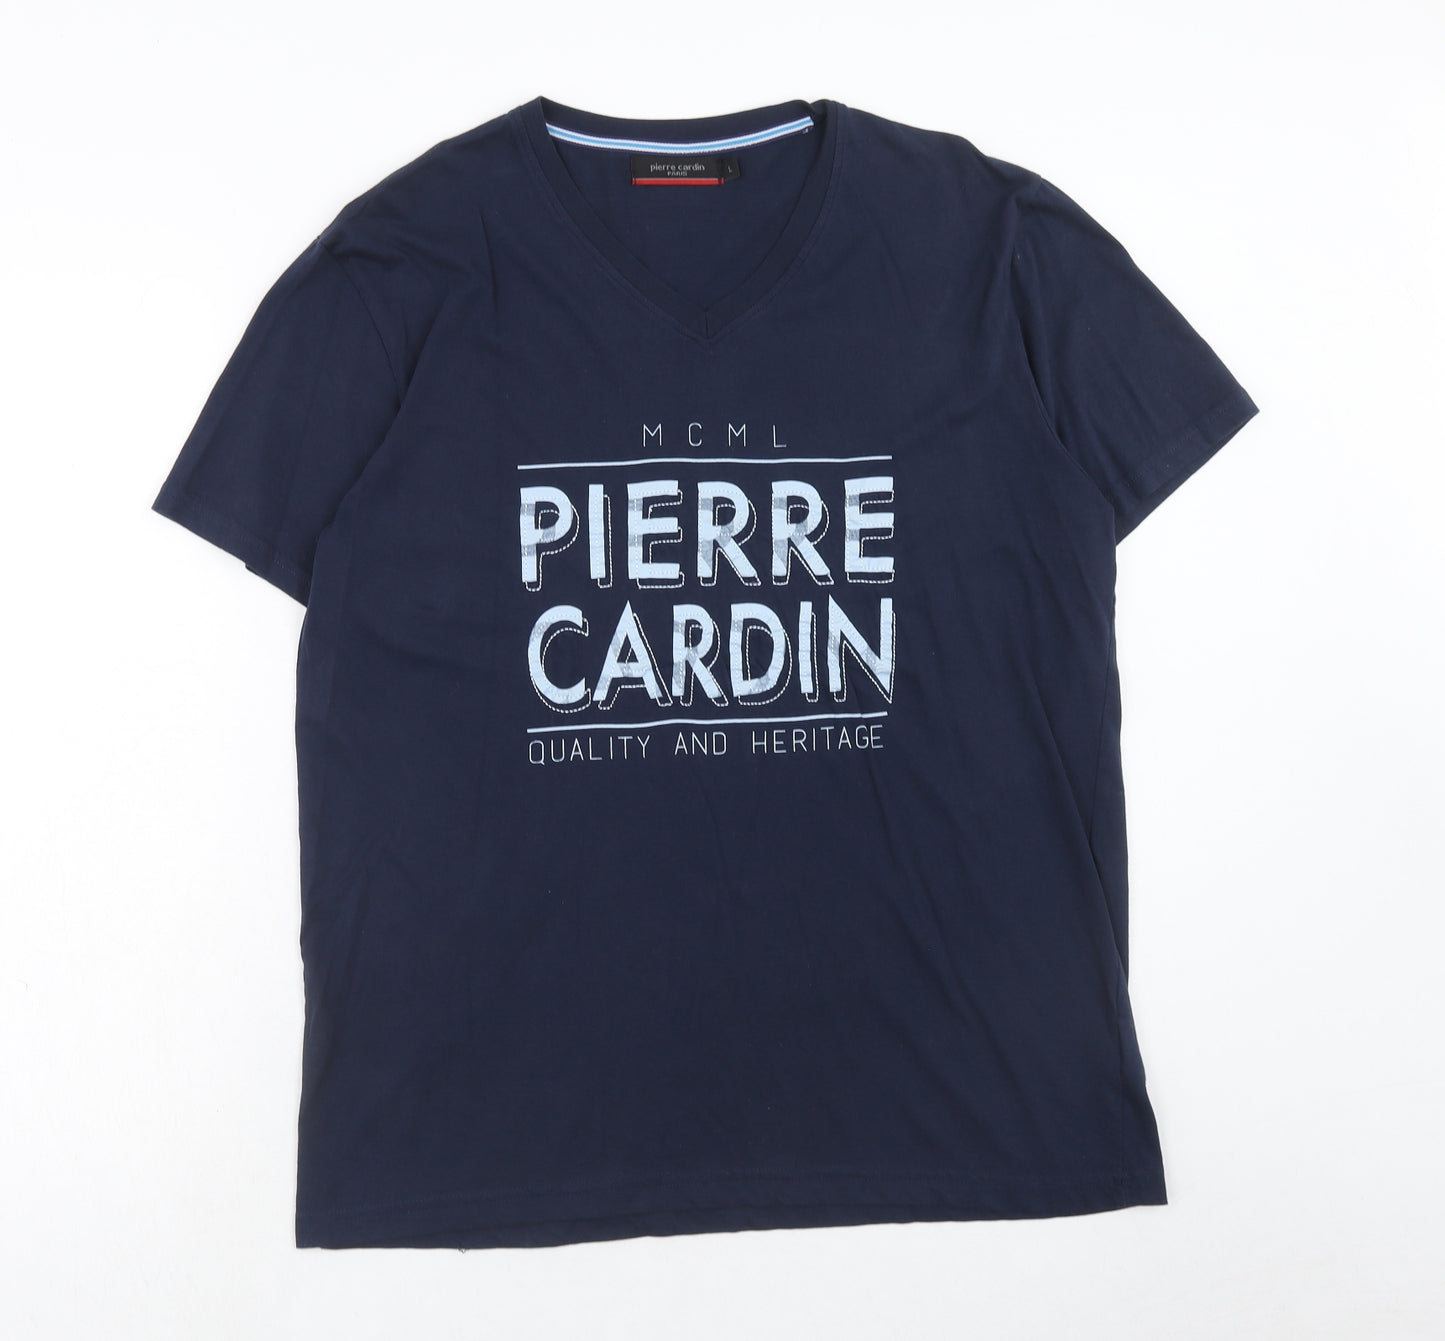 Pierre Cardin Mens Blue Cotton T-Shirt Size L Round Neck Pullover